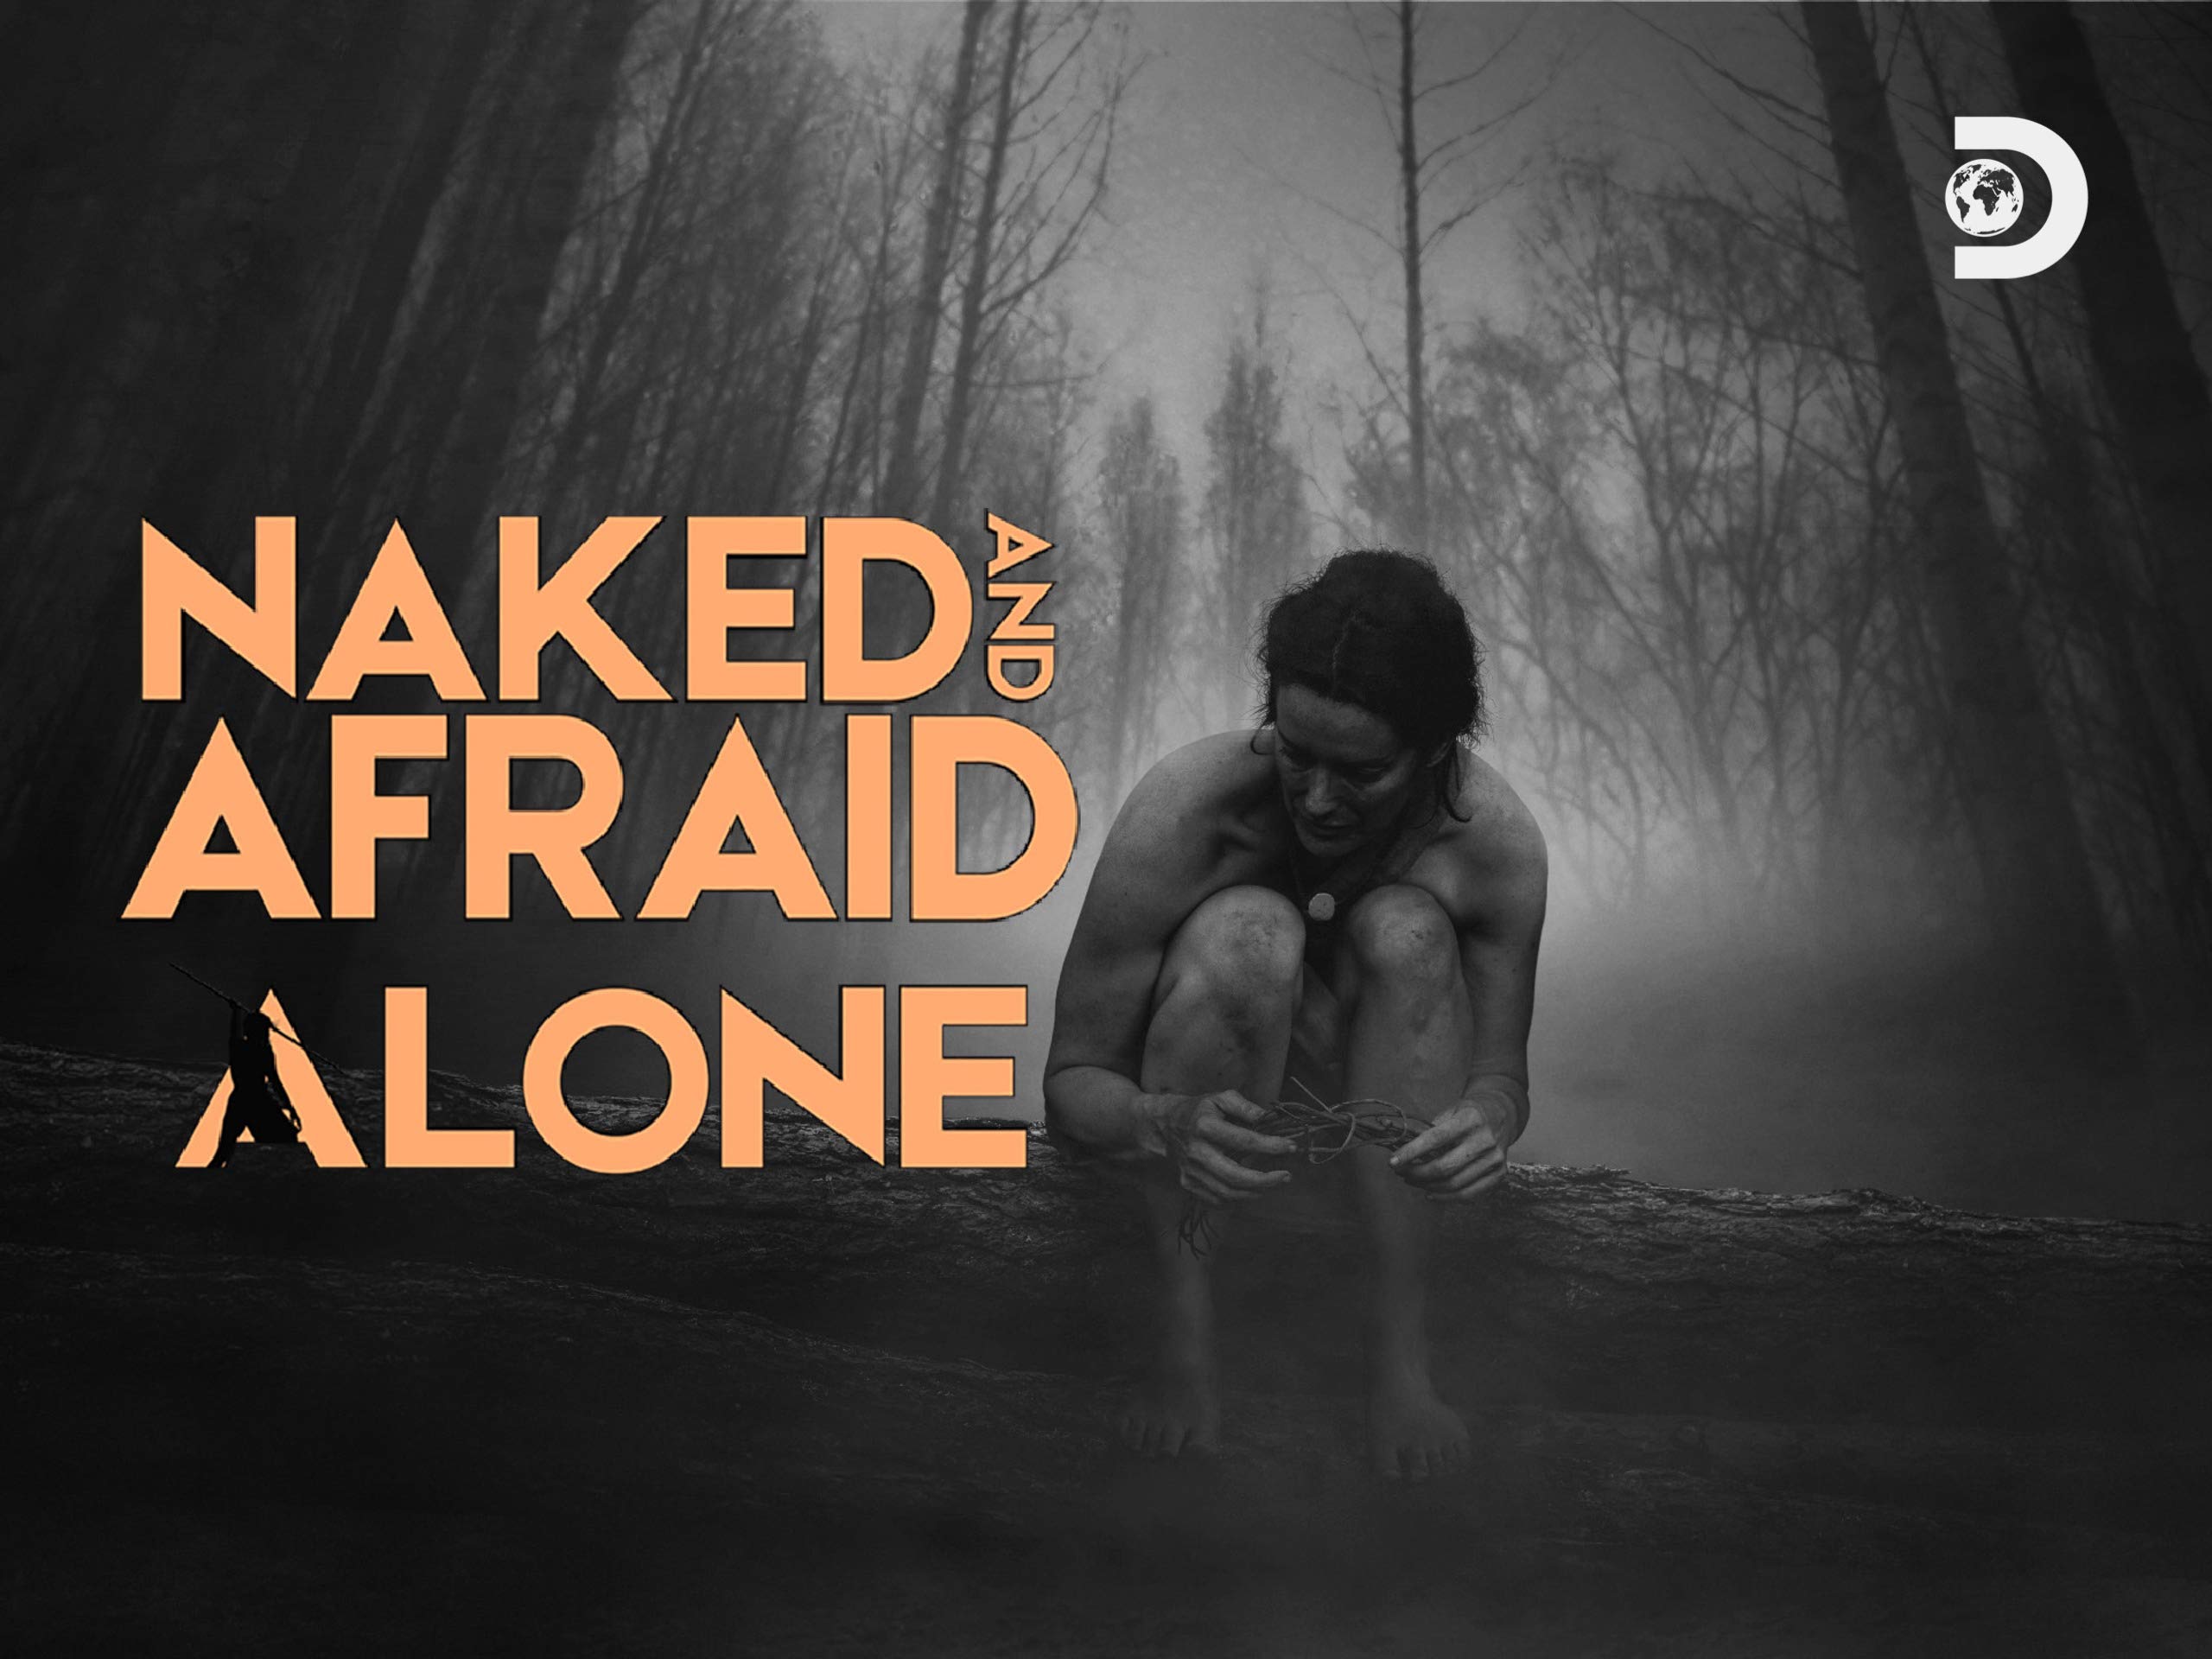 Naked and Afraid: Alone